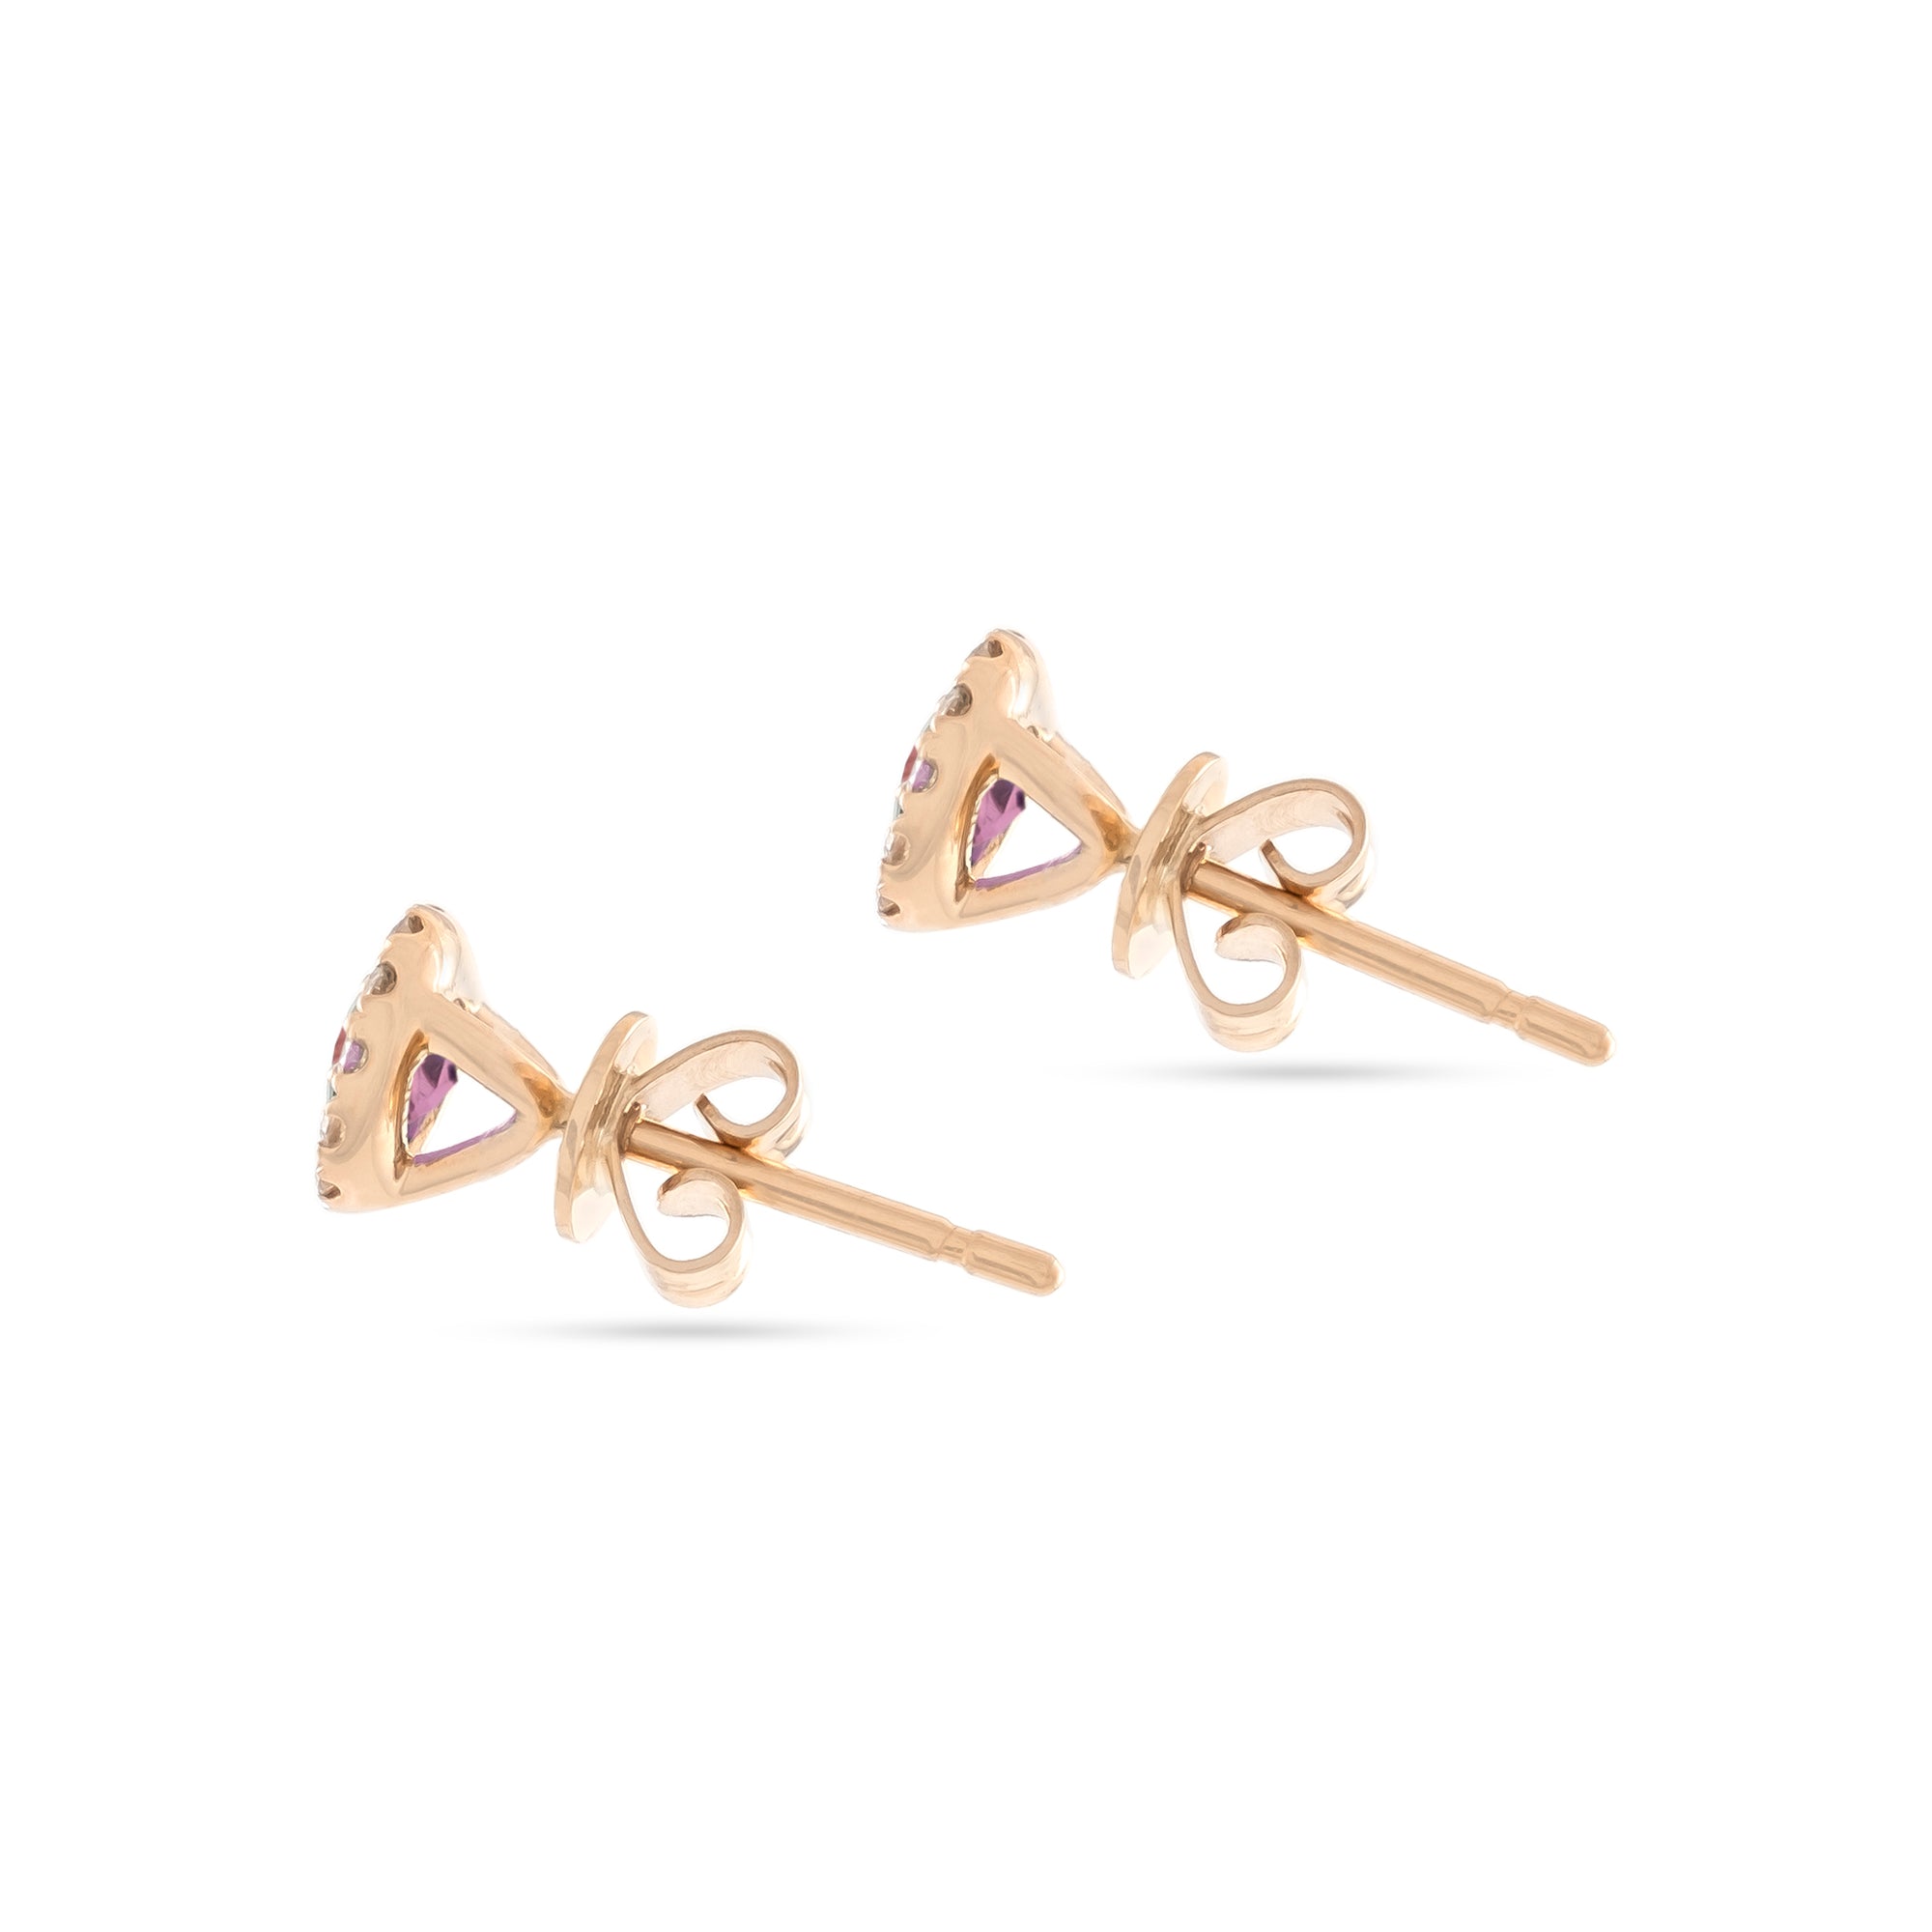 9ct Rose Gold Tourmaline and Diamond Halo Stud Earrings